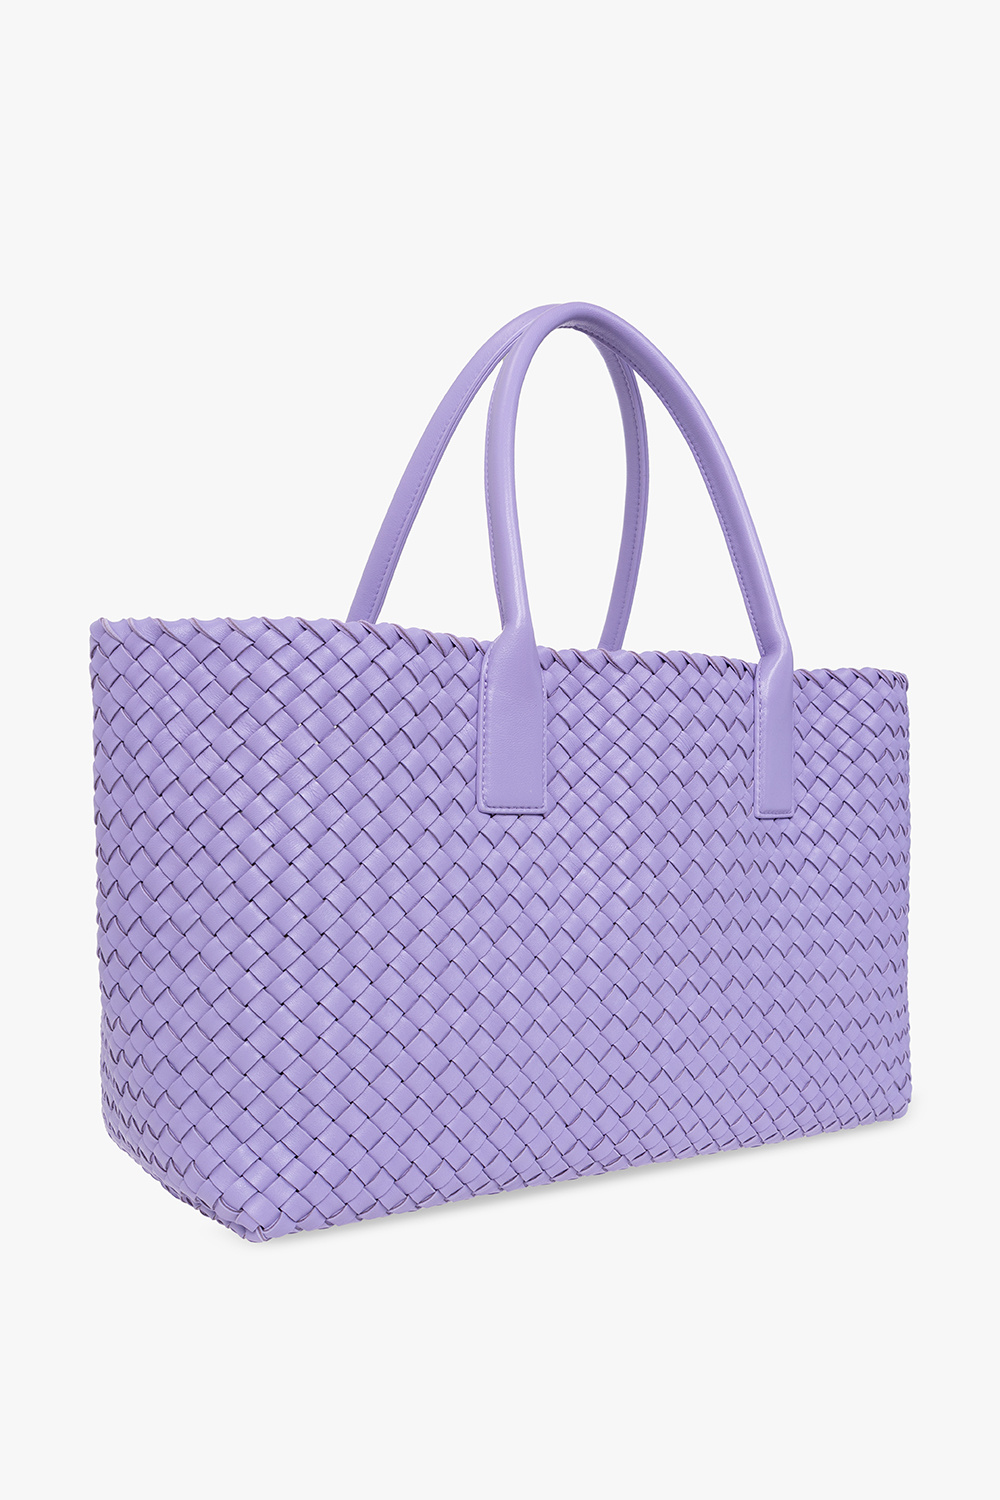 Bottega Veneta ‘Cabat Large’ shopper bag